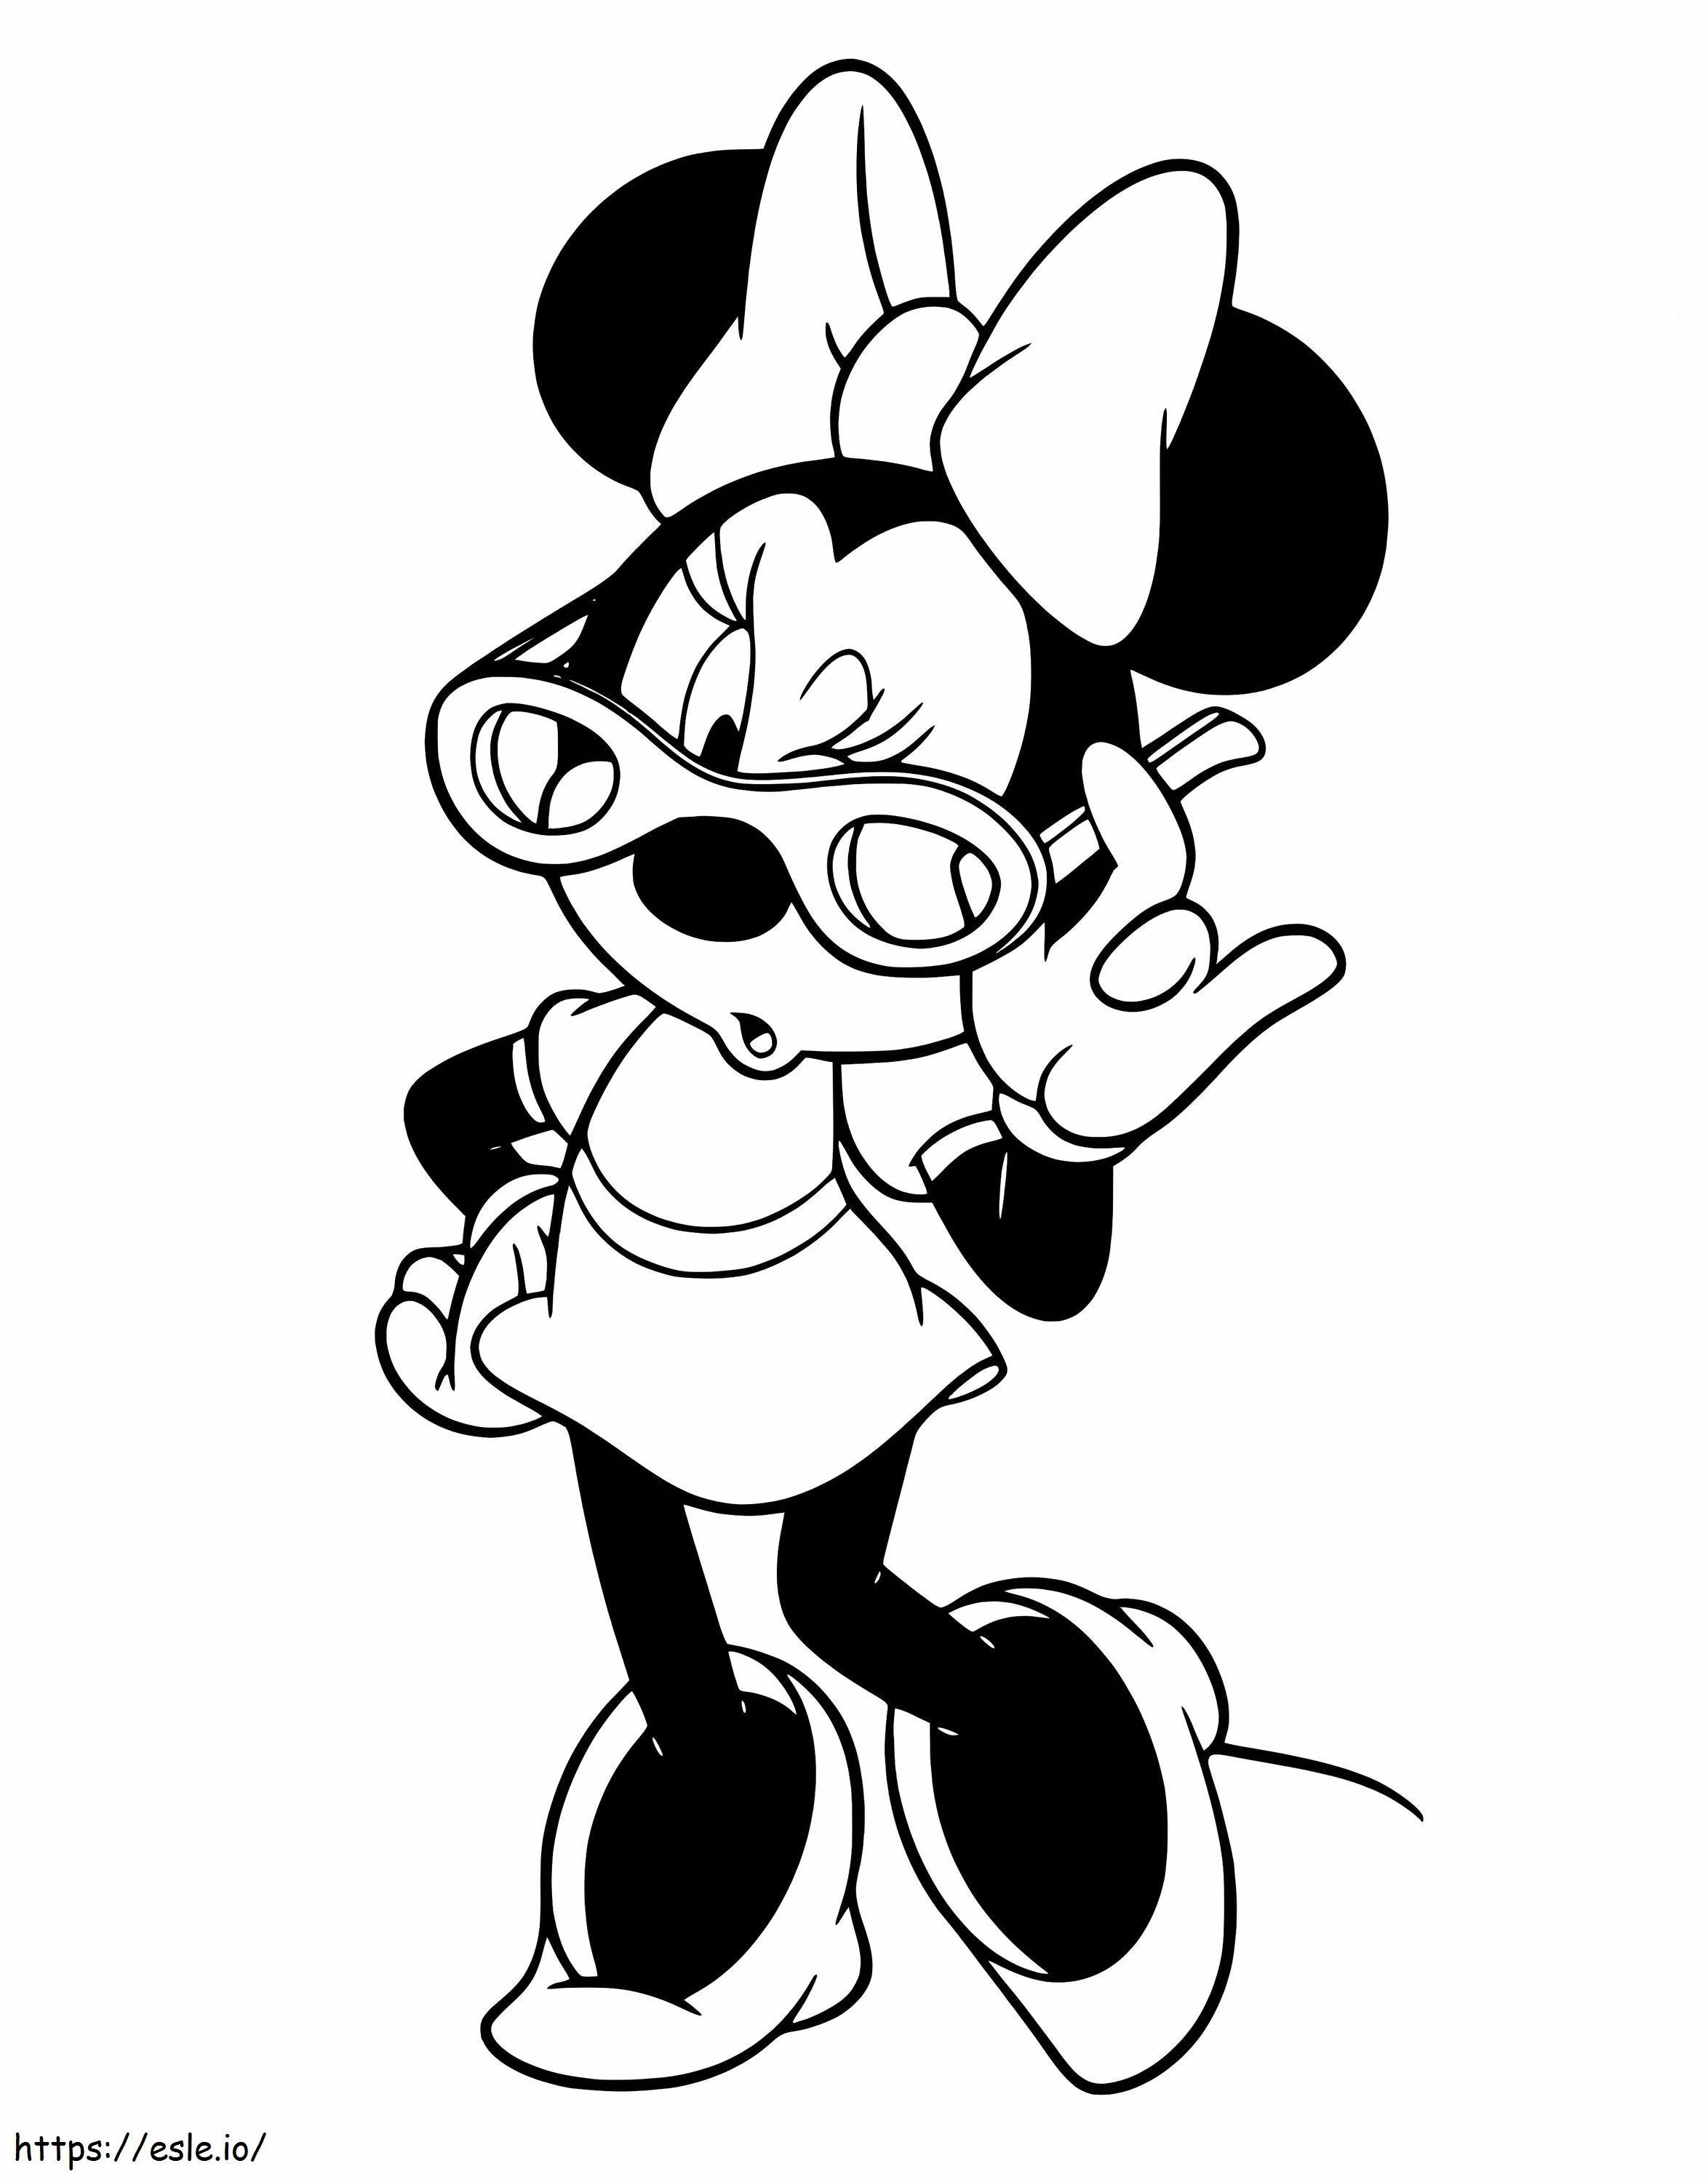 Genial Minnie Mouse para colorear